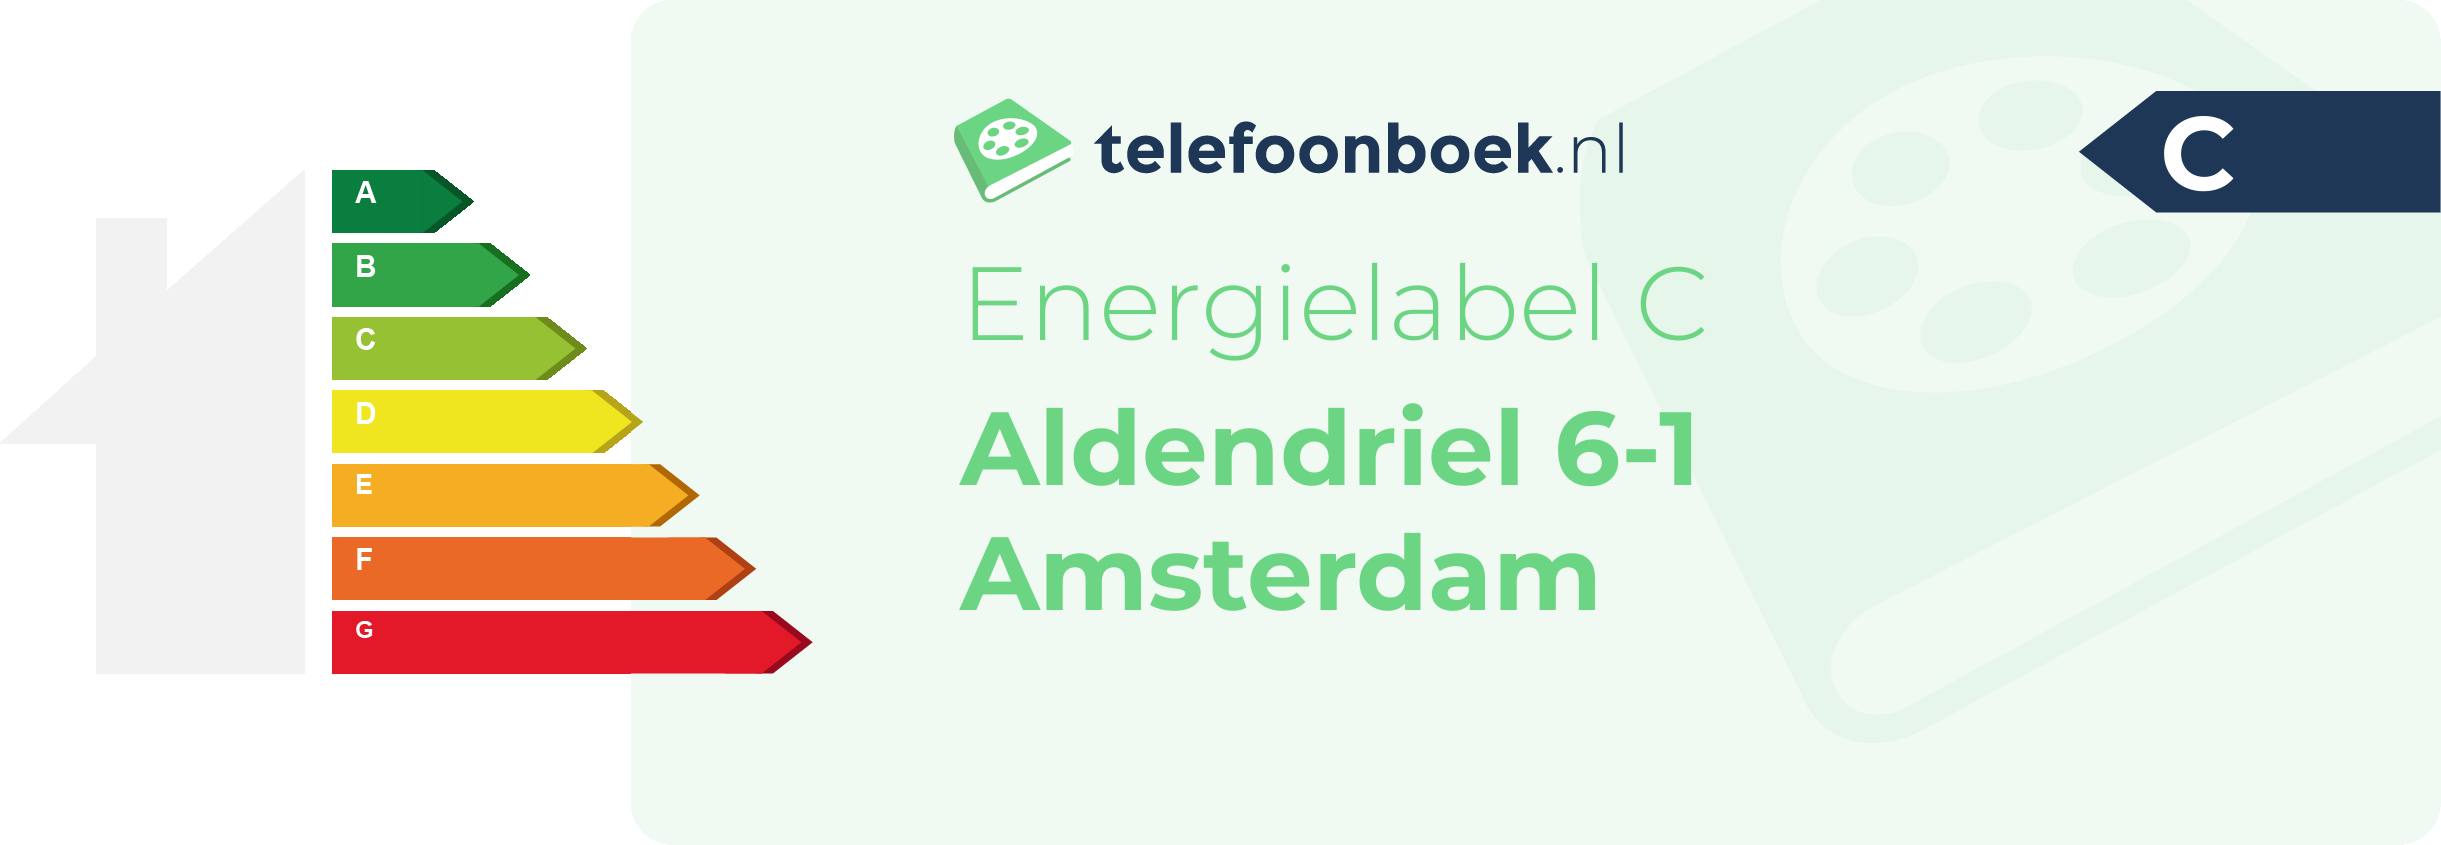 Energielabel Aldendriel 6-1 Amsterdam